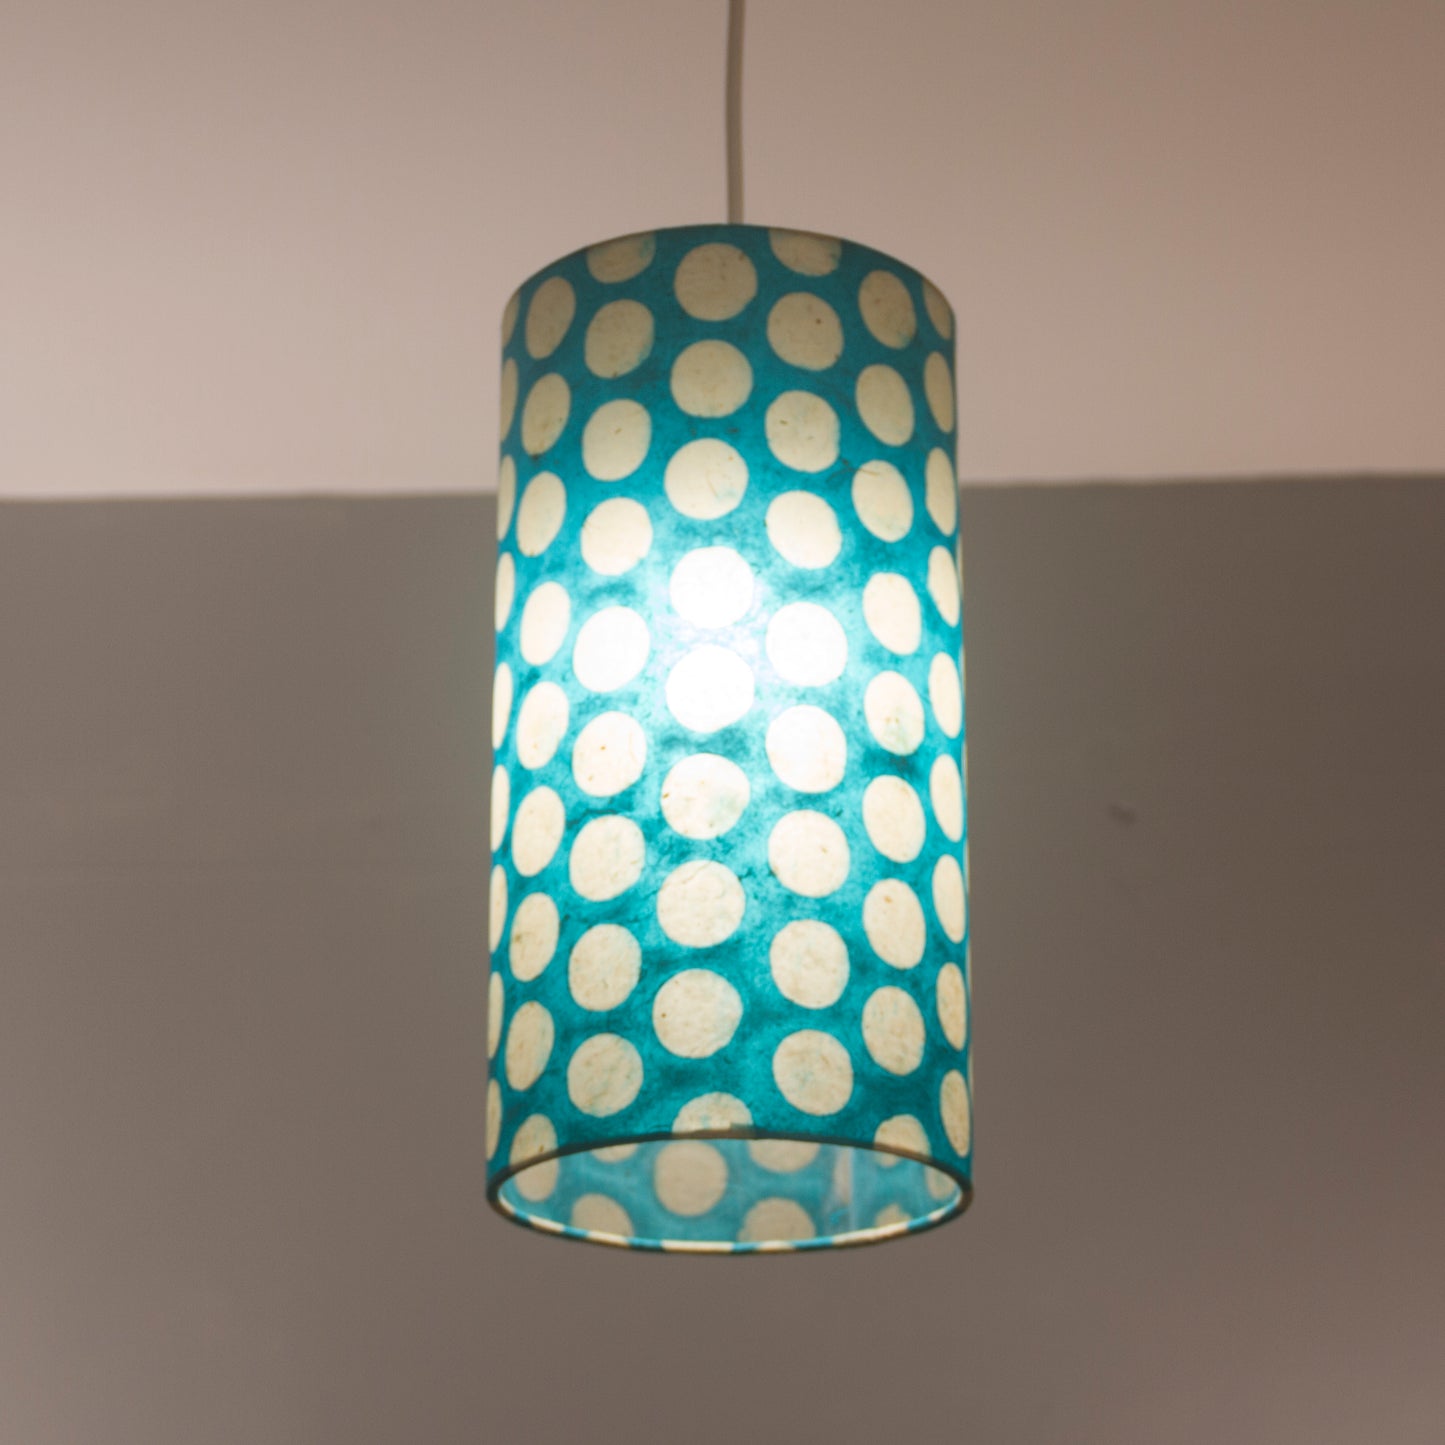 2 Tier Lamp Shade - P97 - Batik Dots on Cyan, 40cm x 20cm & 30cm x 15cm